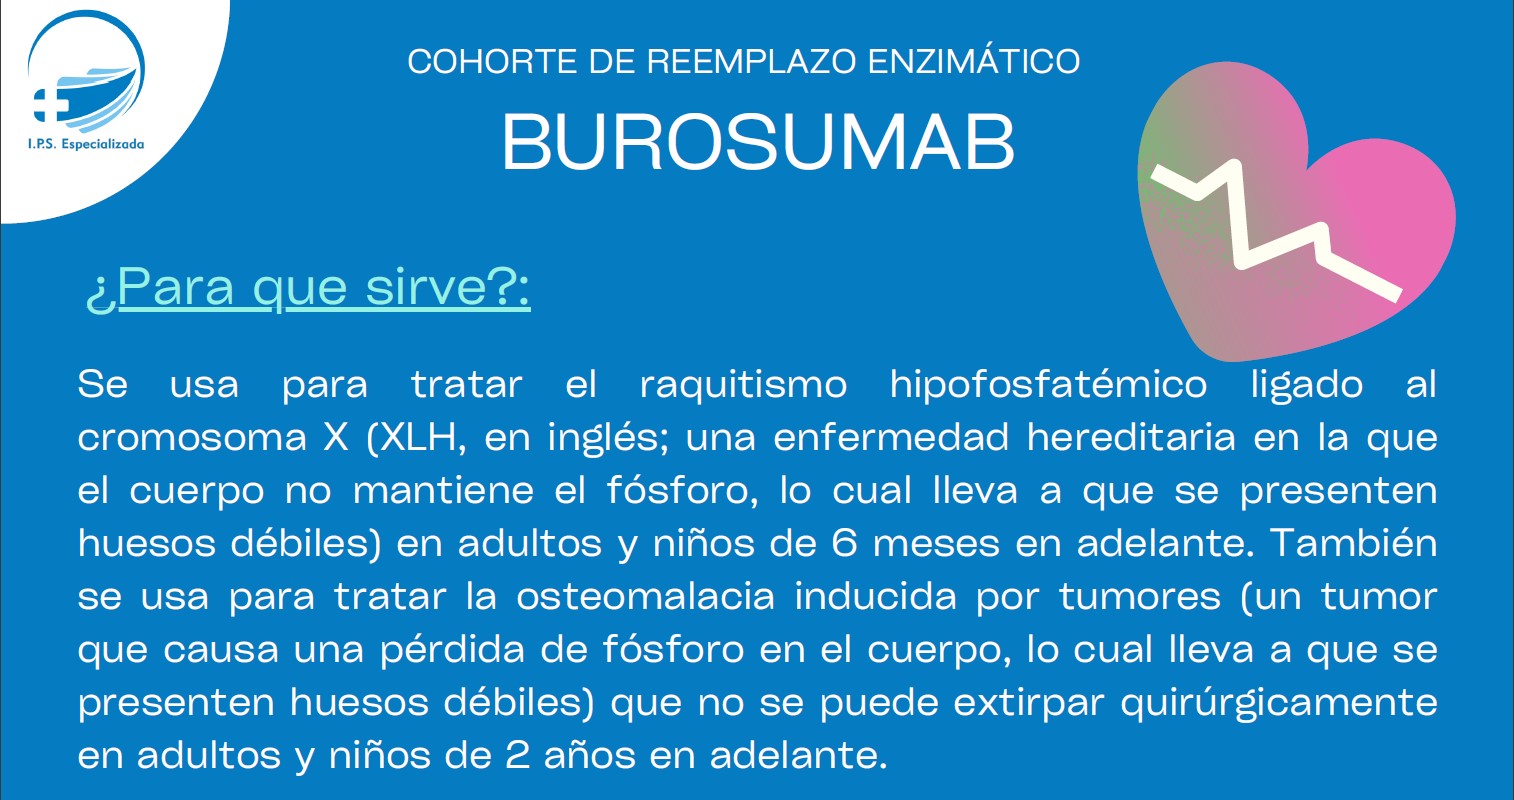 BUROSUMAB